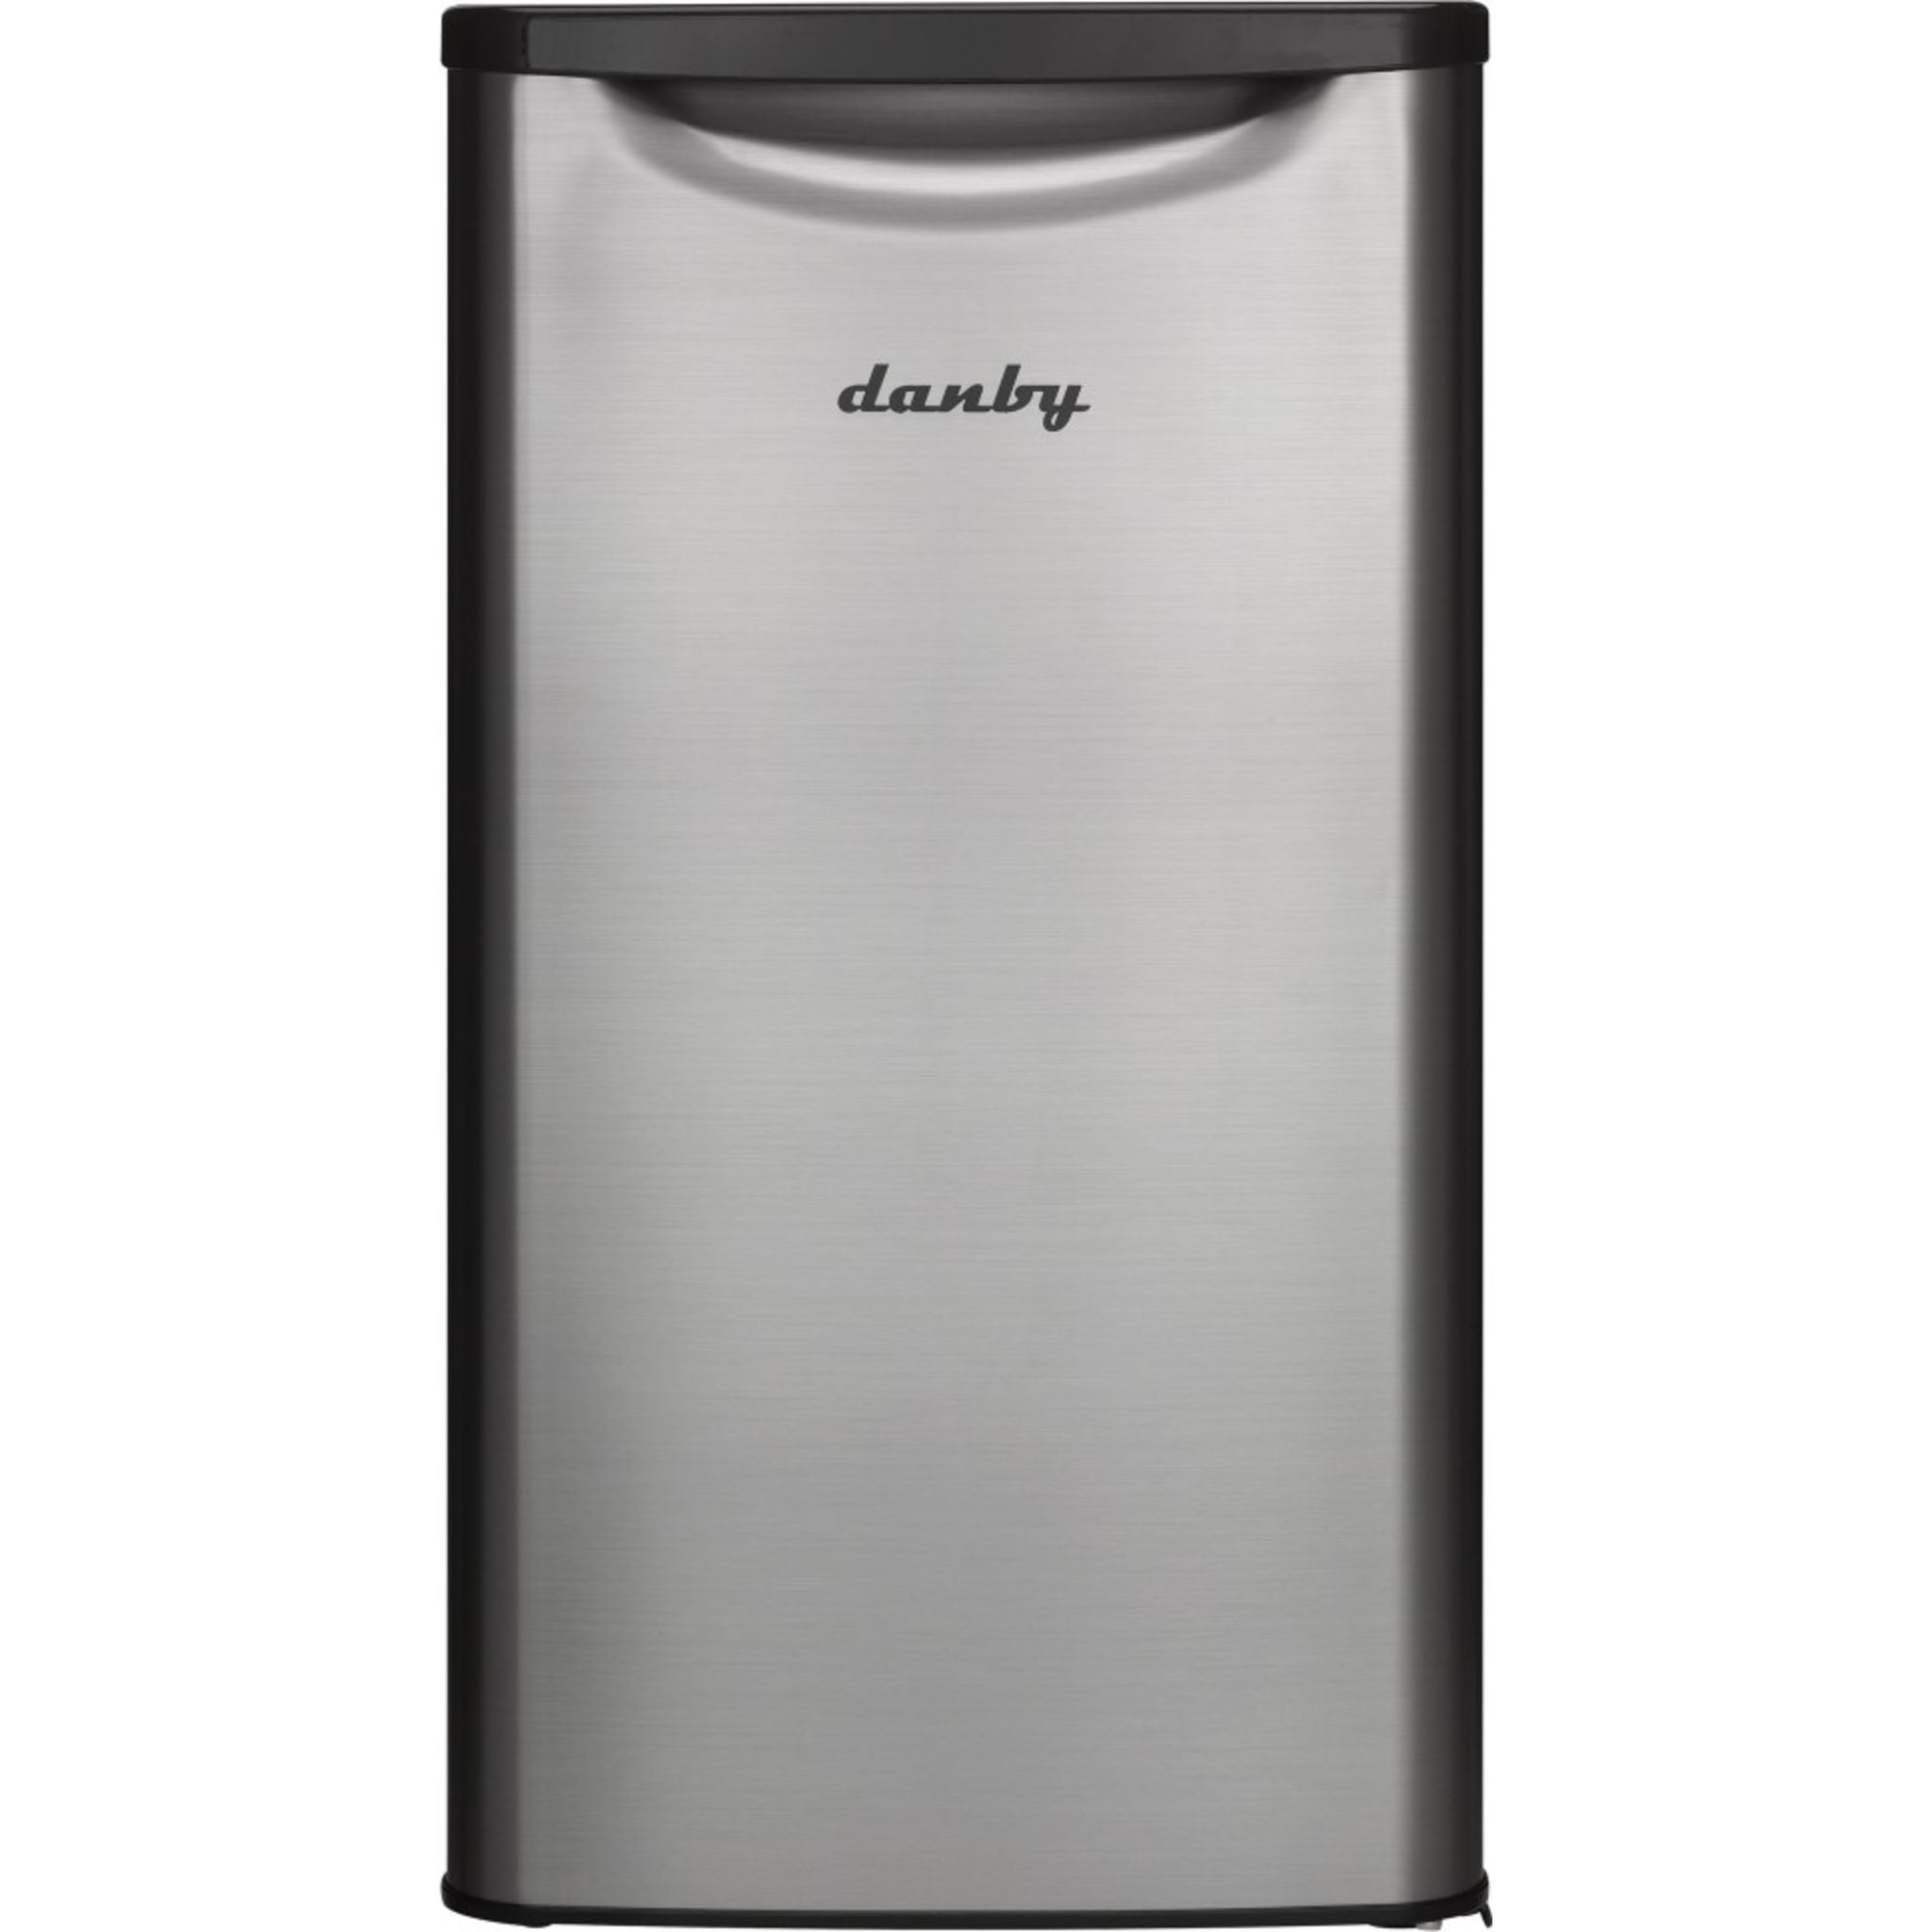 Danby, Danby Compact Fridge (DAR033A6BSLDB) - Stainless Steel